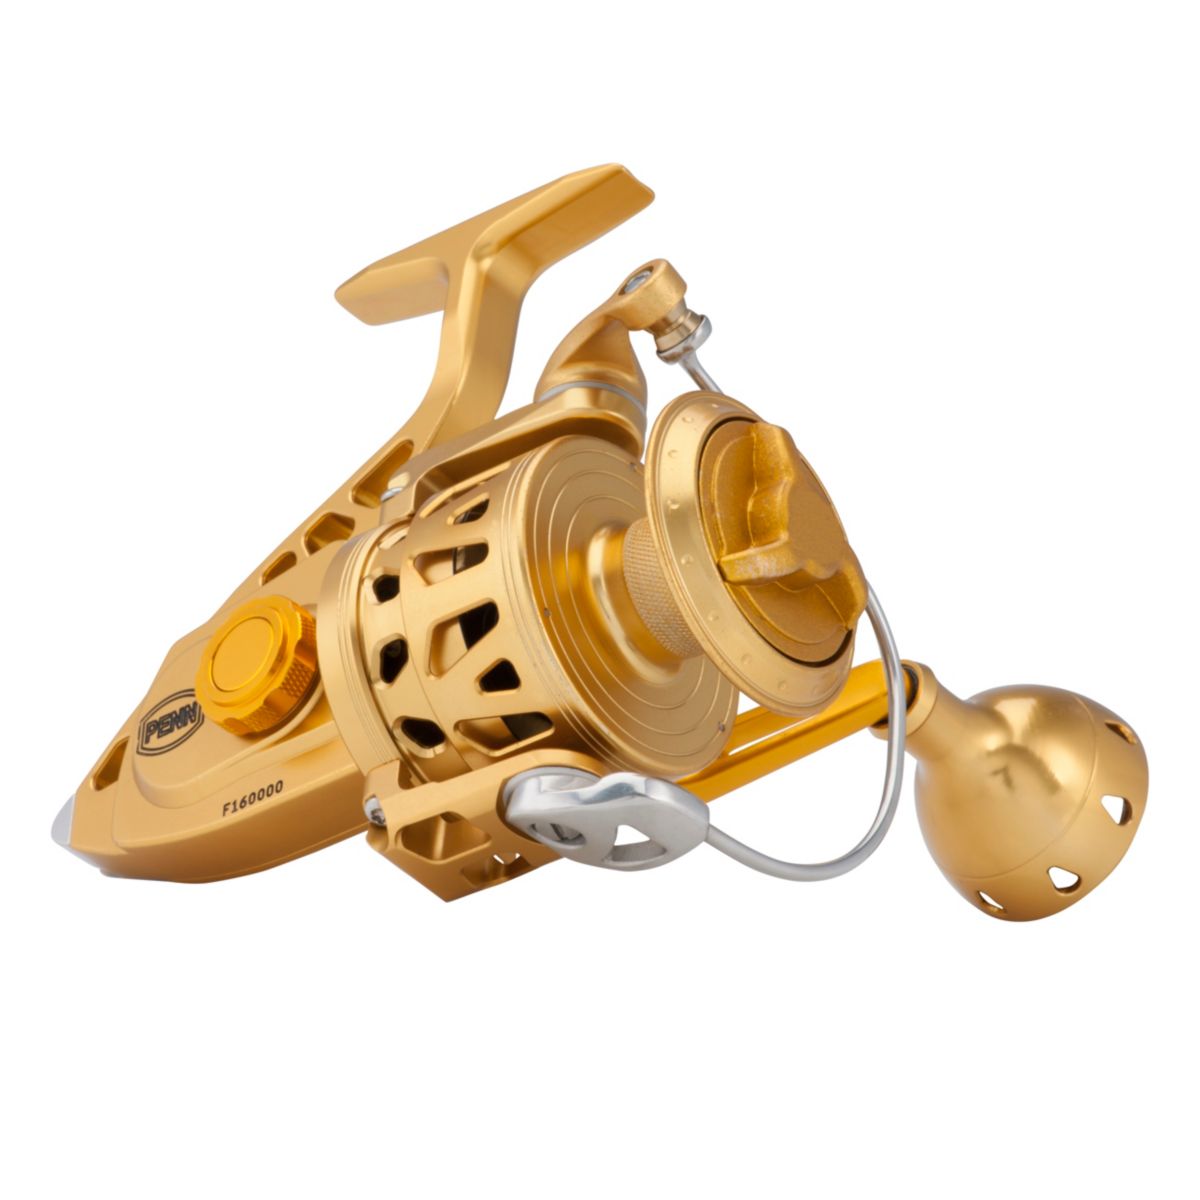 Penn TRQII5500-G Gold Torque II Spinning Reel